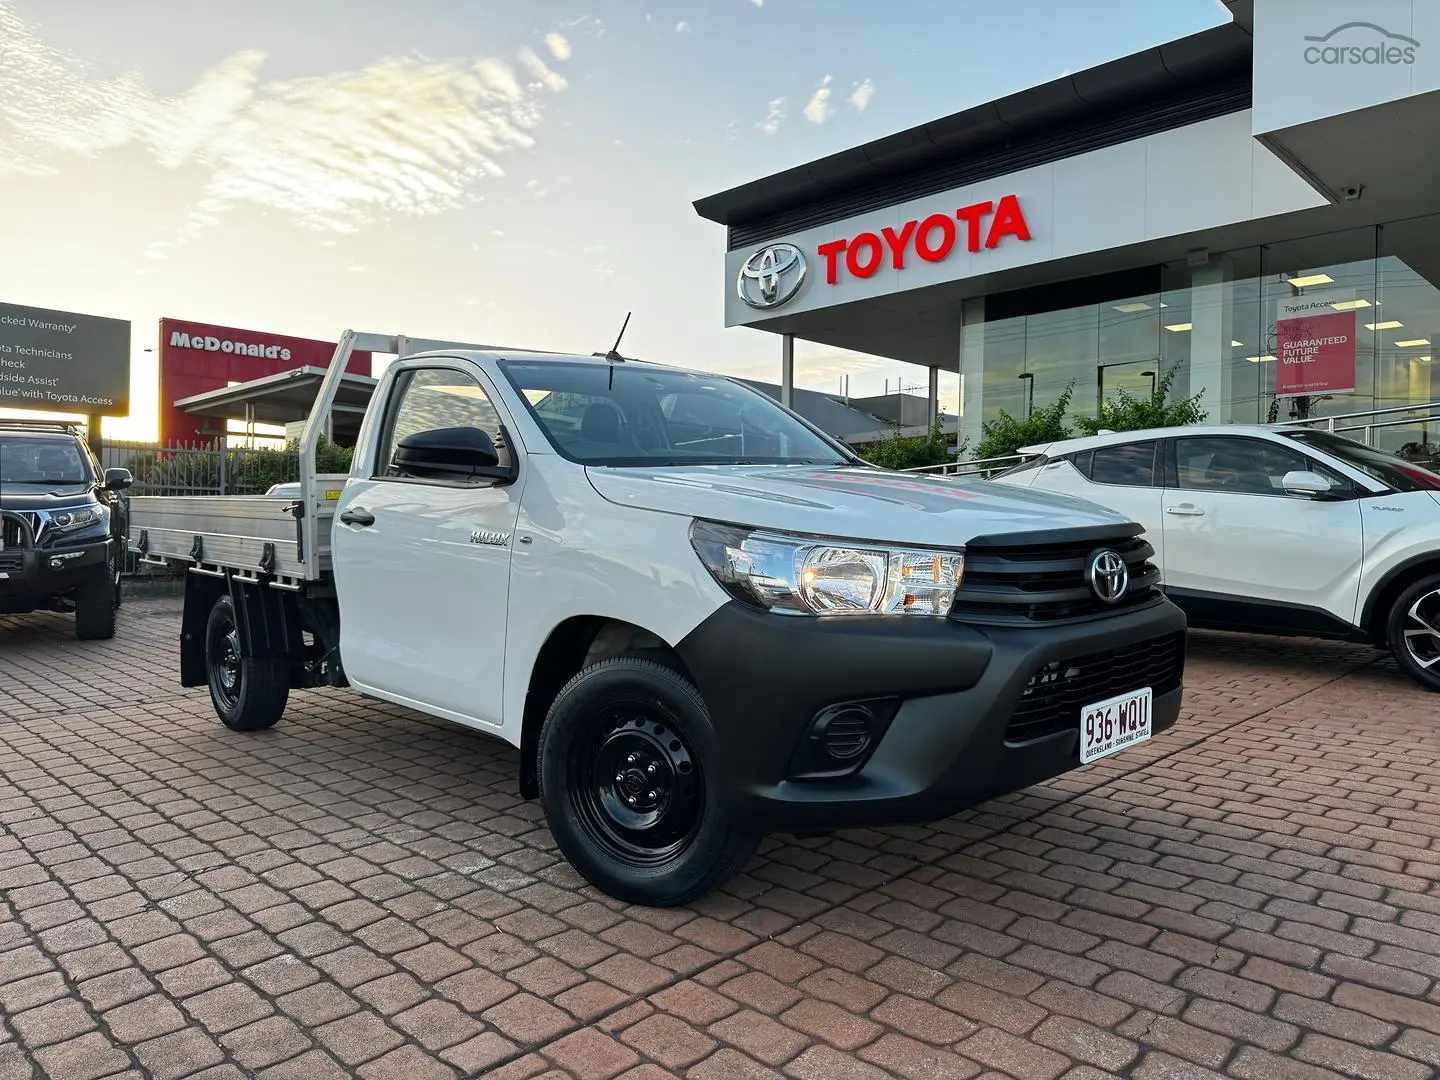 2016 Toyota Hilux Image 1